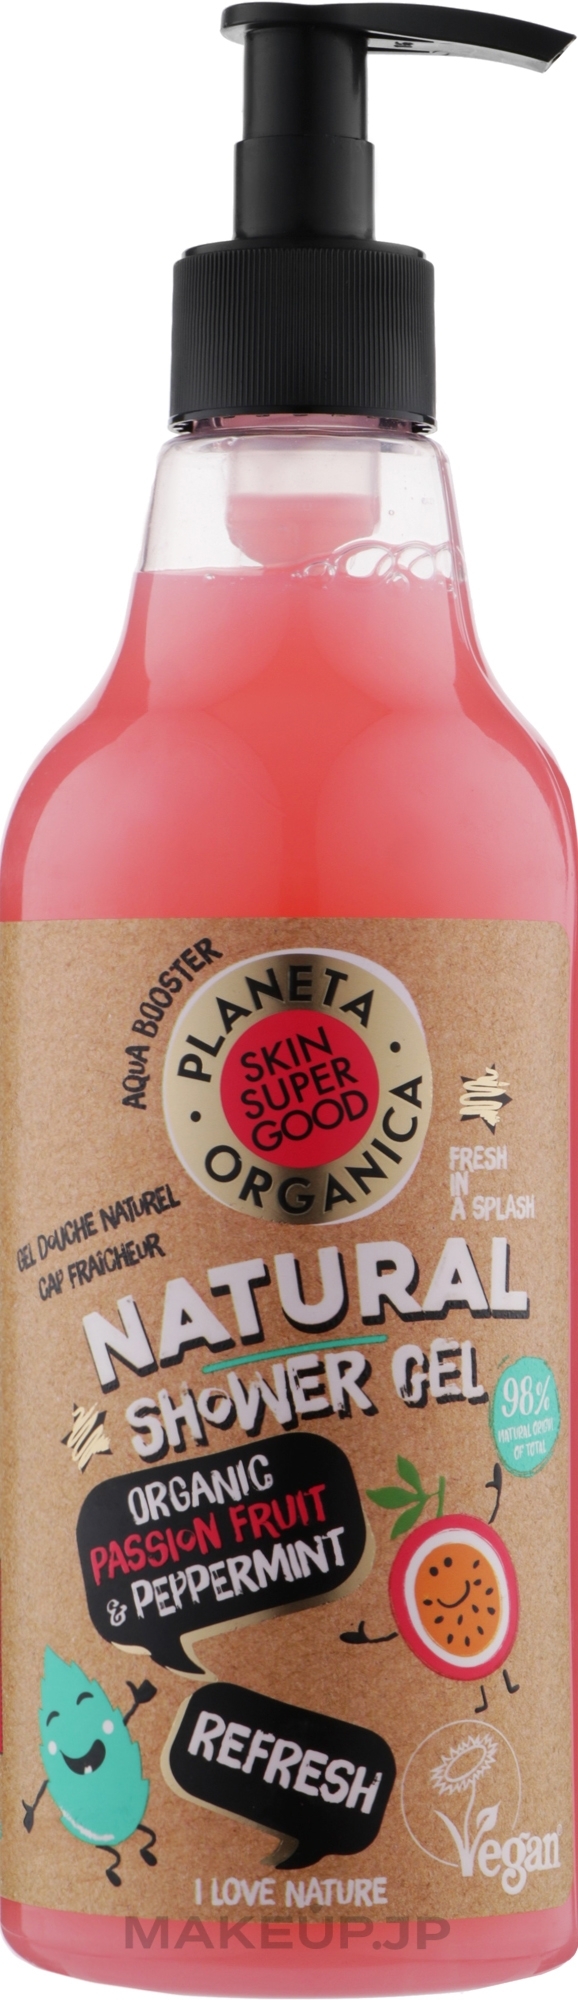 Shower Gel - Planeta Organica Skin Super Food Refresh Shower Gel with Organic Passion Fruit & Peppermint — photo 500 ml